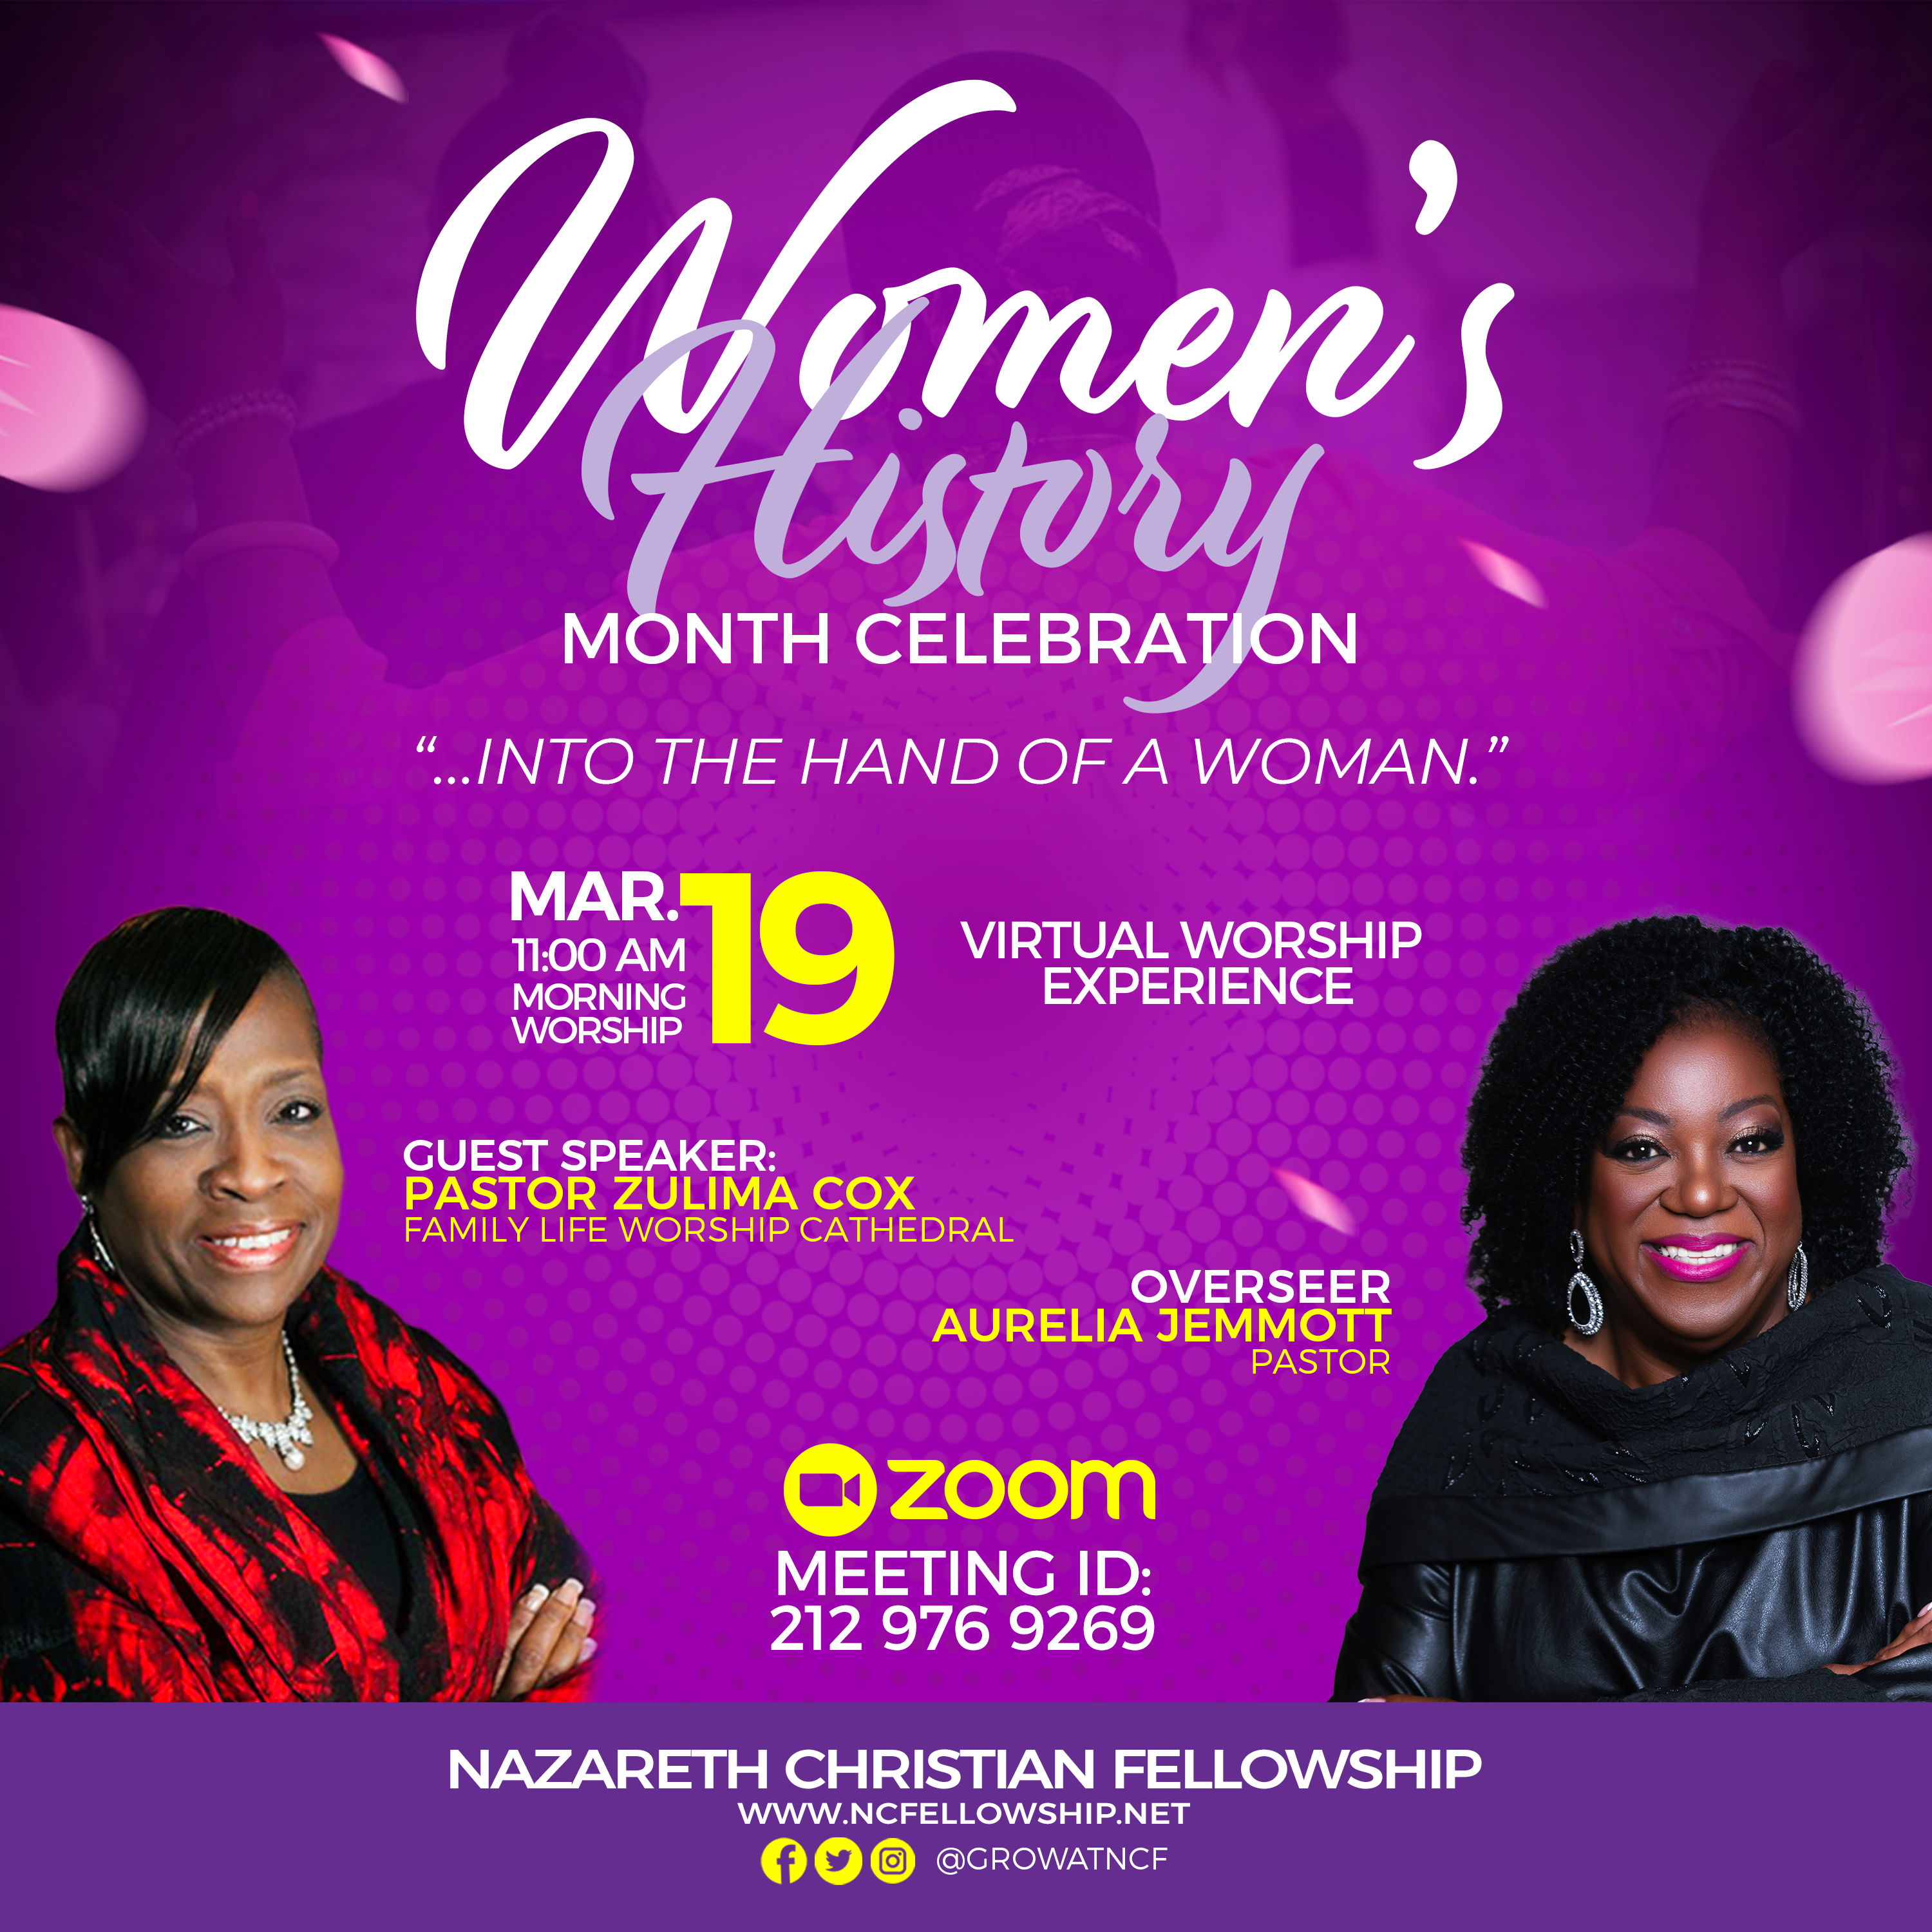 NCF Women's History Month Celebration